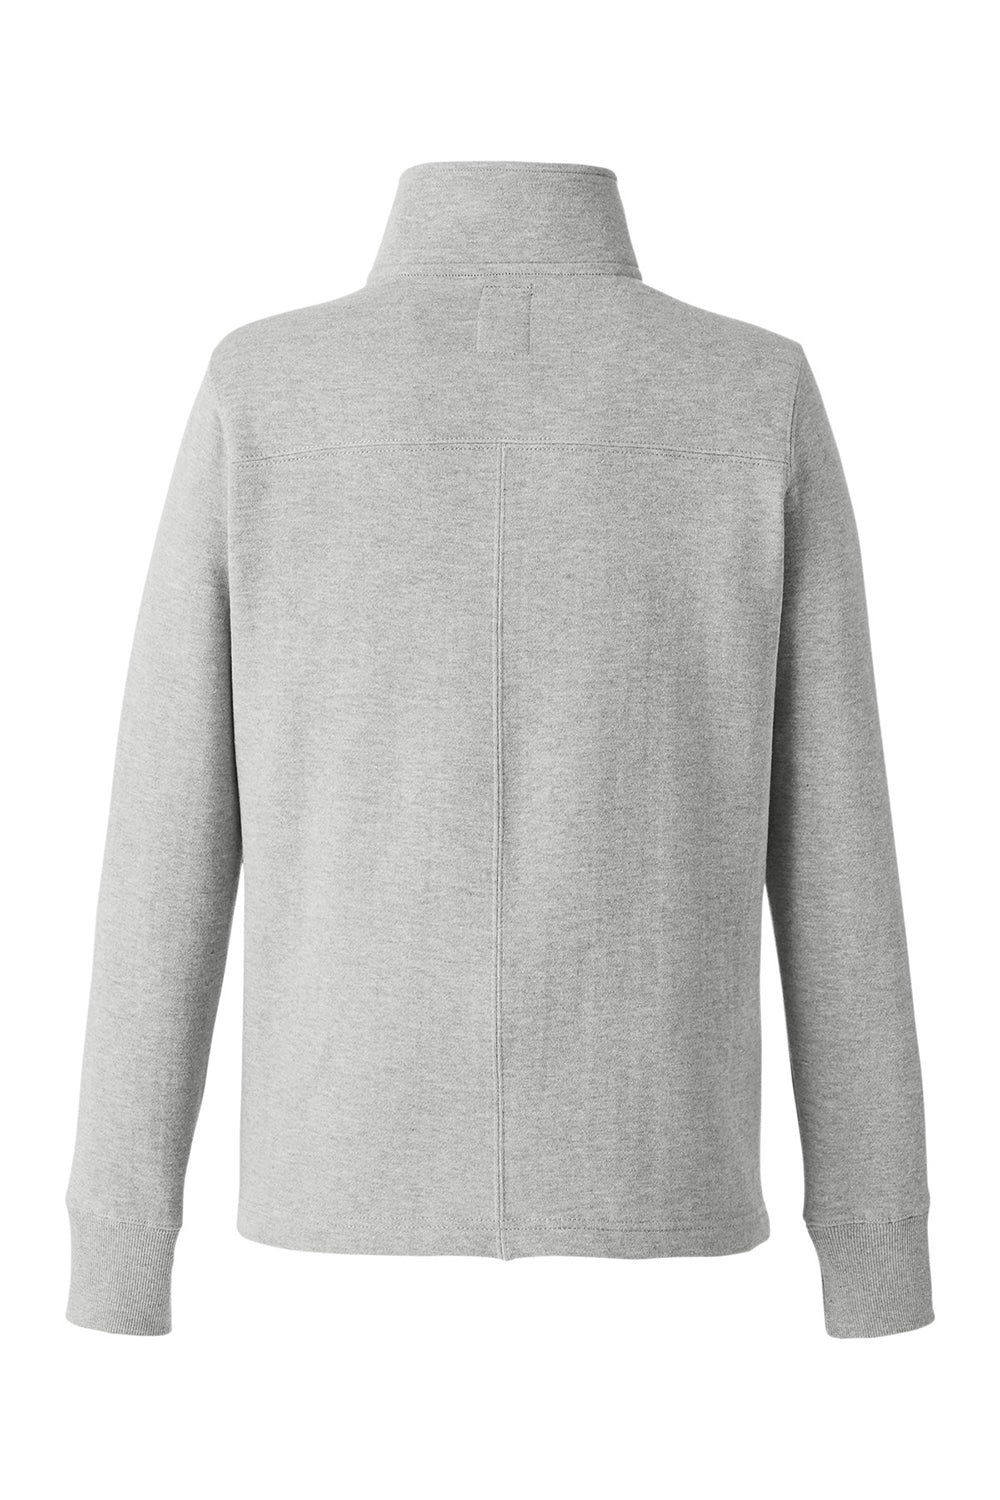 Nautica N17397 Womens Anchor Fleece 1/4 Zip Sweatshirt Oxford Grey Flat Back